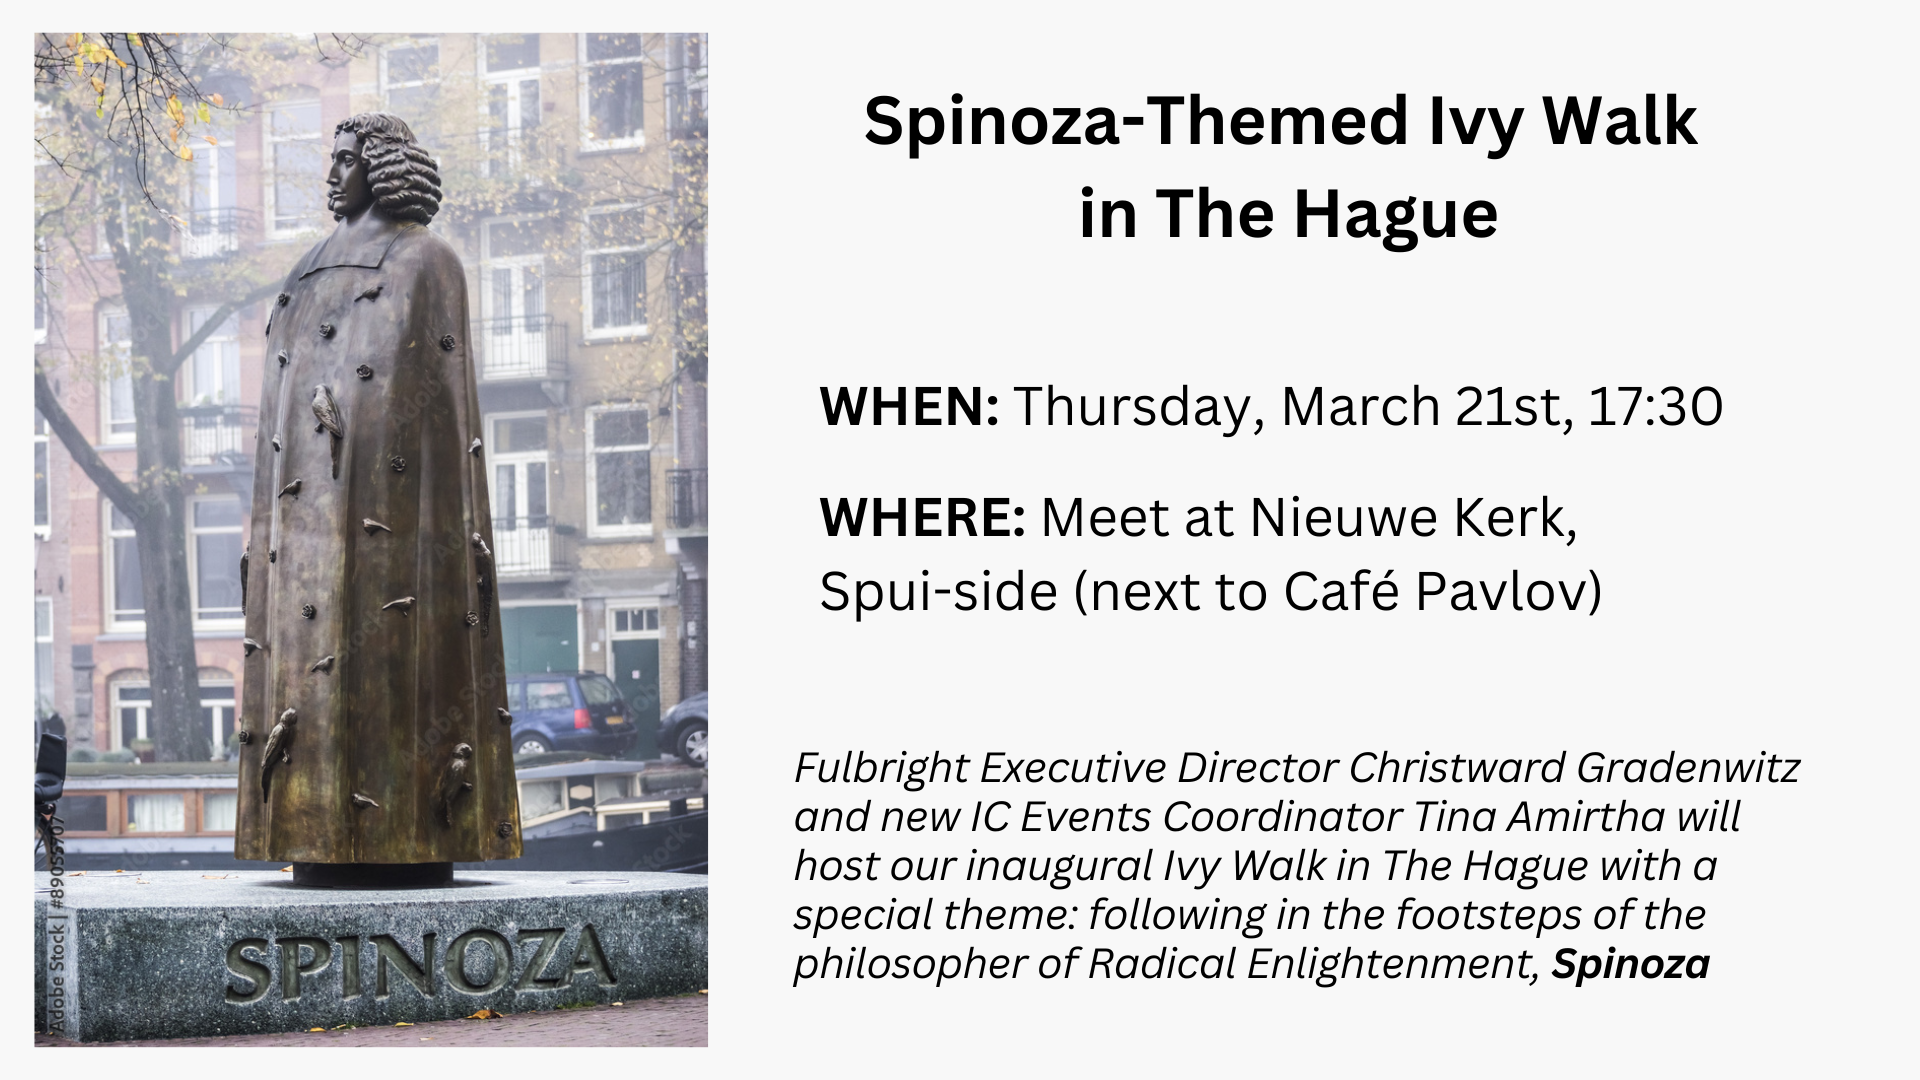 Spinoza-themed Ivy Walk in The Hague